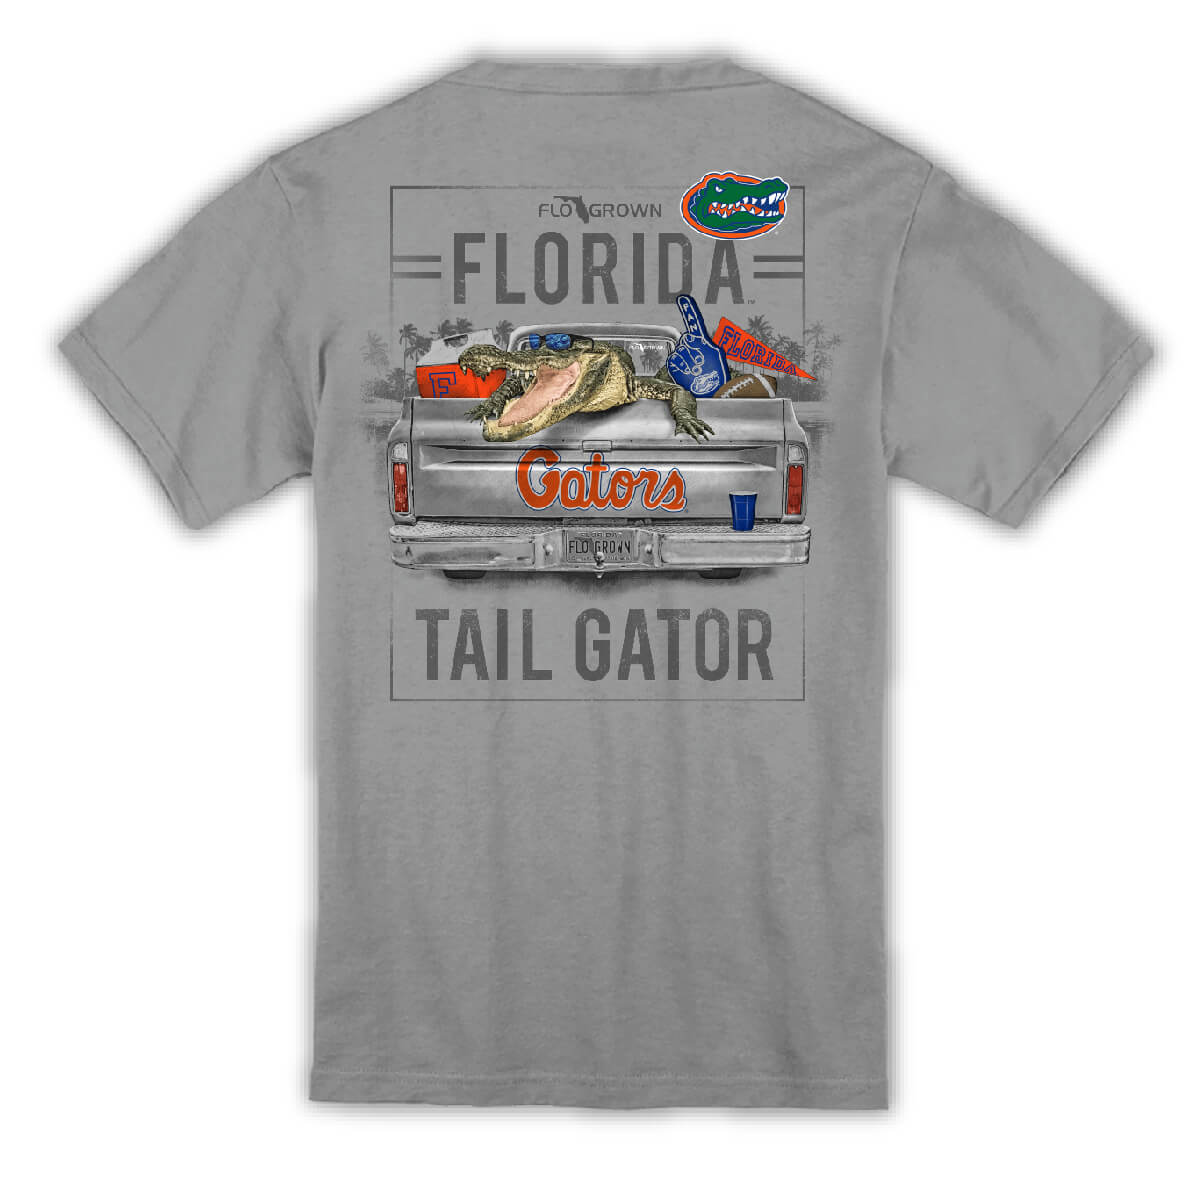 Florida Gators Tail Gator Youth Tee - Back